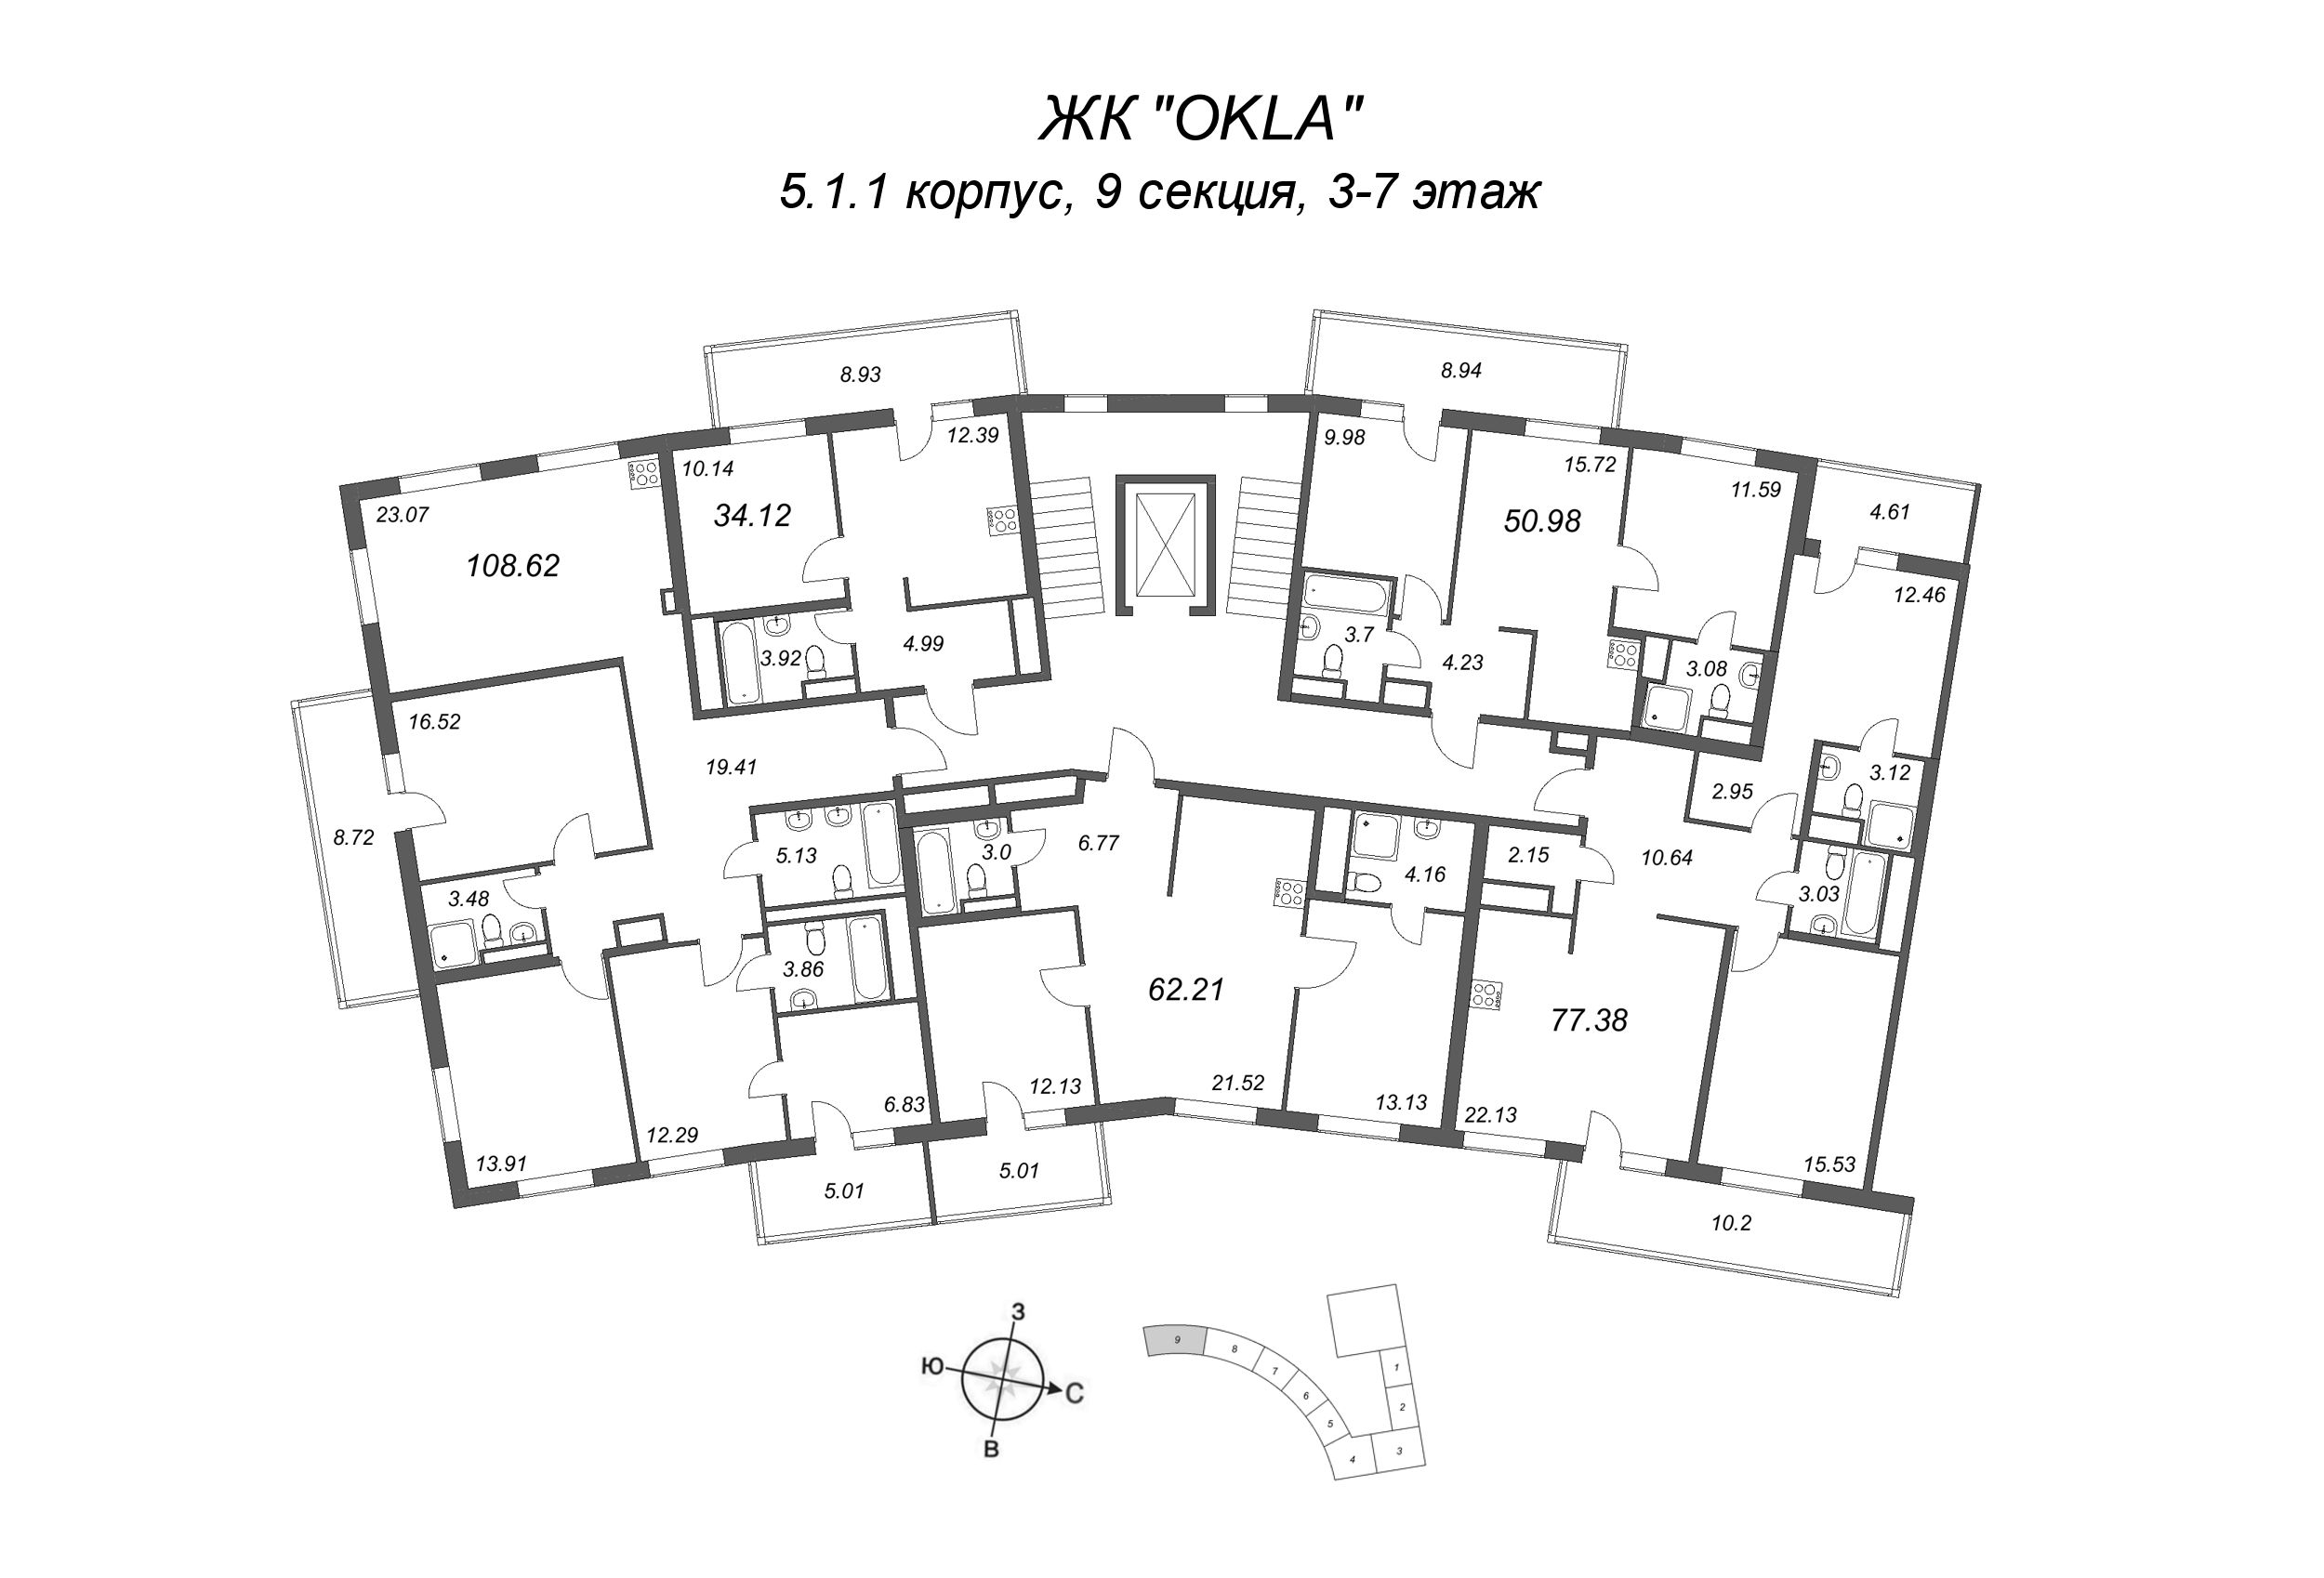 3-комнатная (Евро) квартира, 65.71 м² - планировка этажа